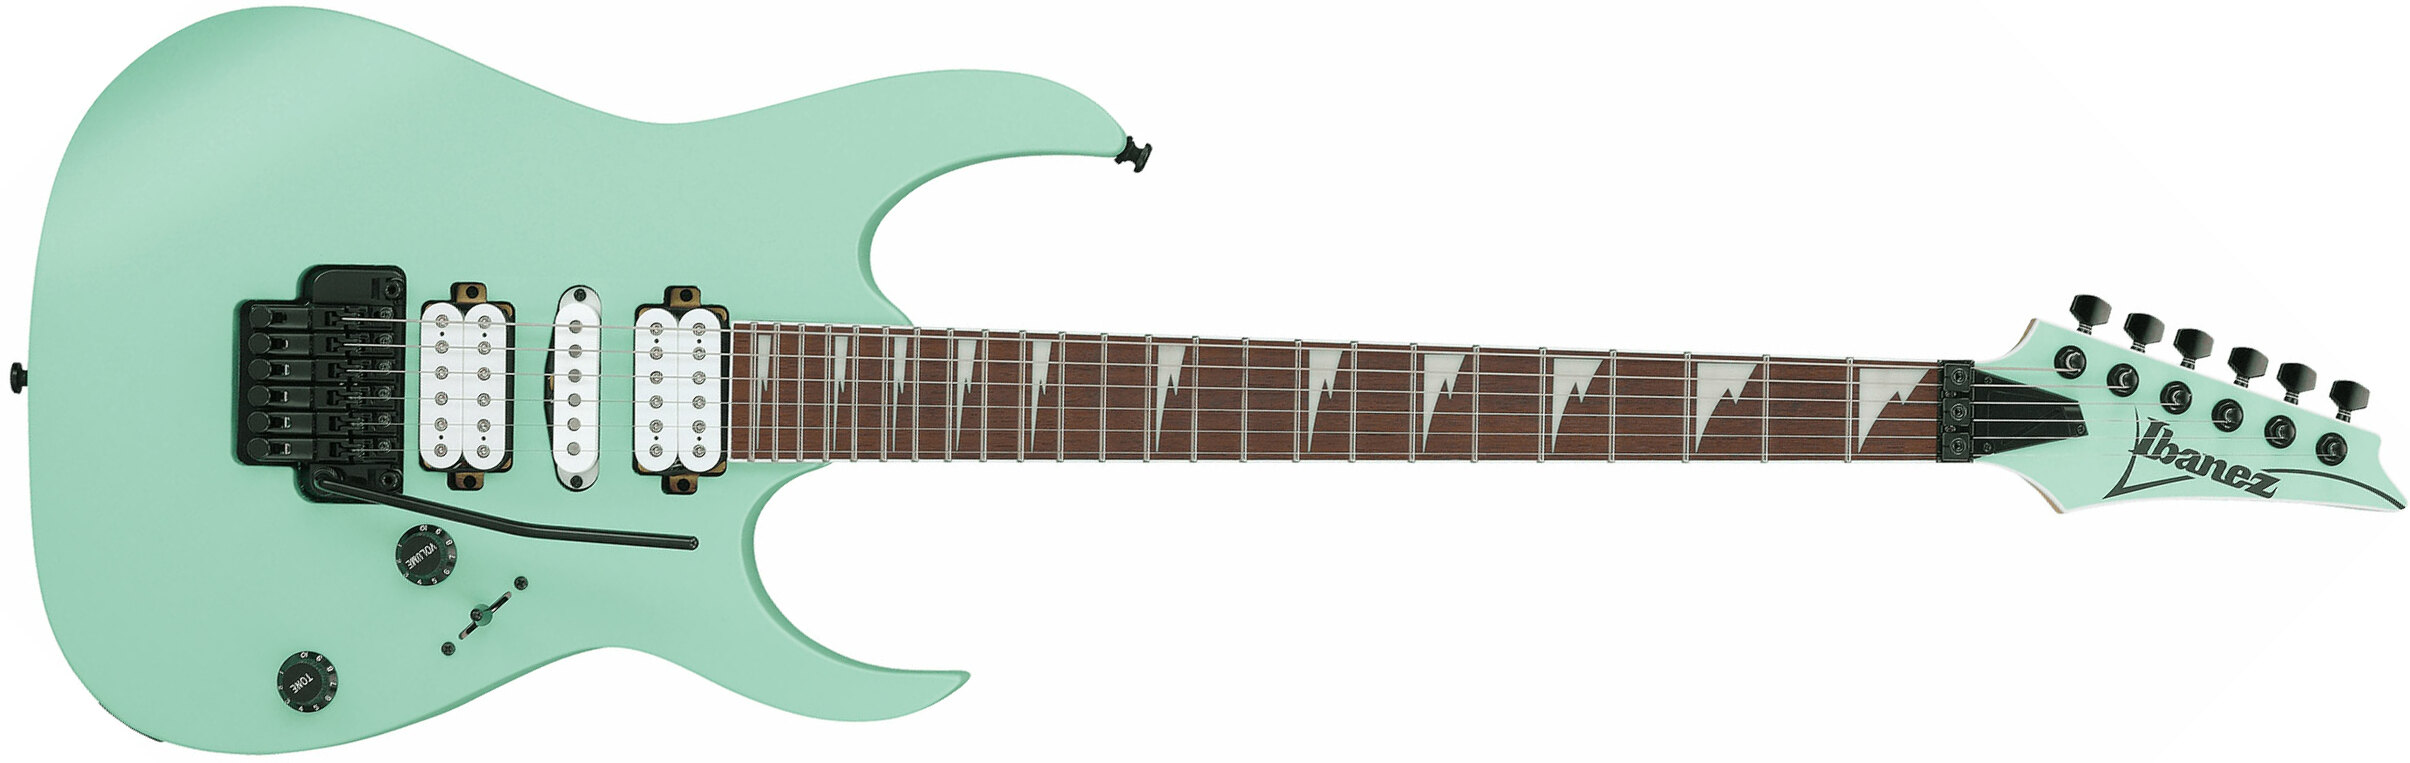 Ibanez Rg470dx Sfm Standard Hsh Fr Jat - Sea Foam Green Matte - Str shape electric guitar - Main picture